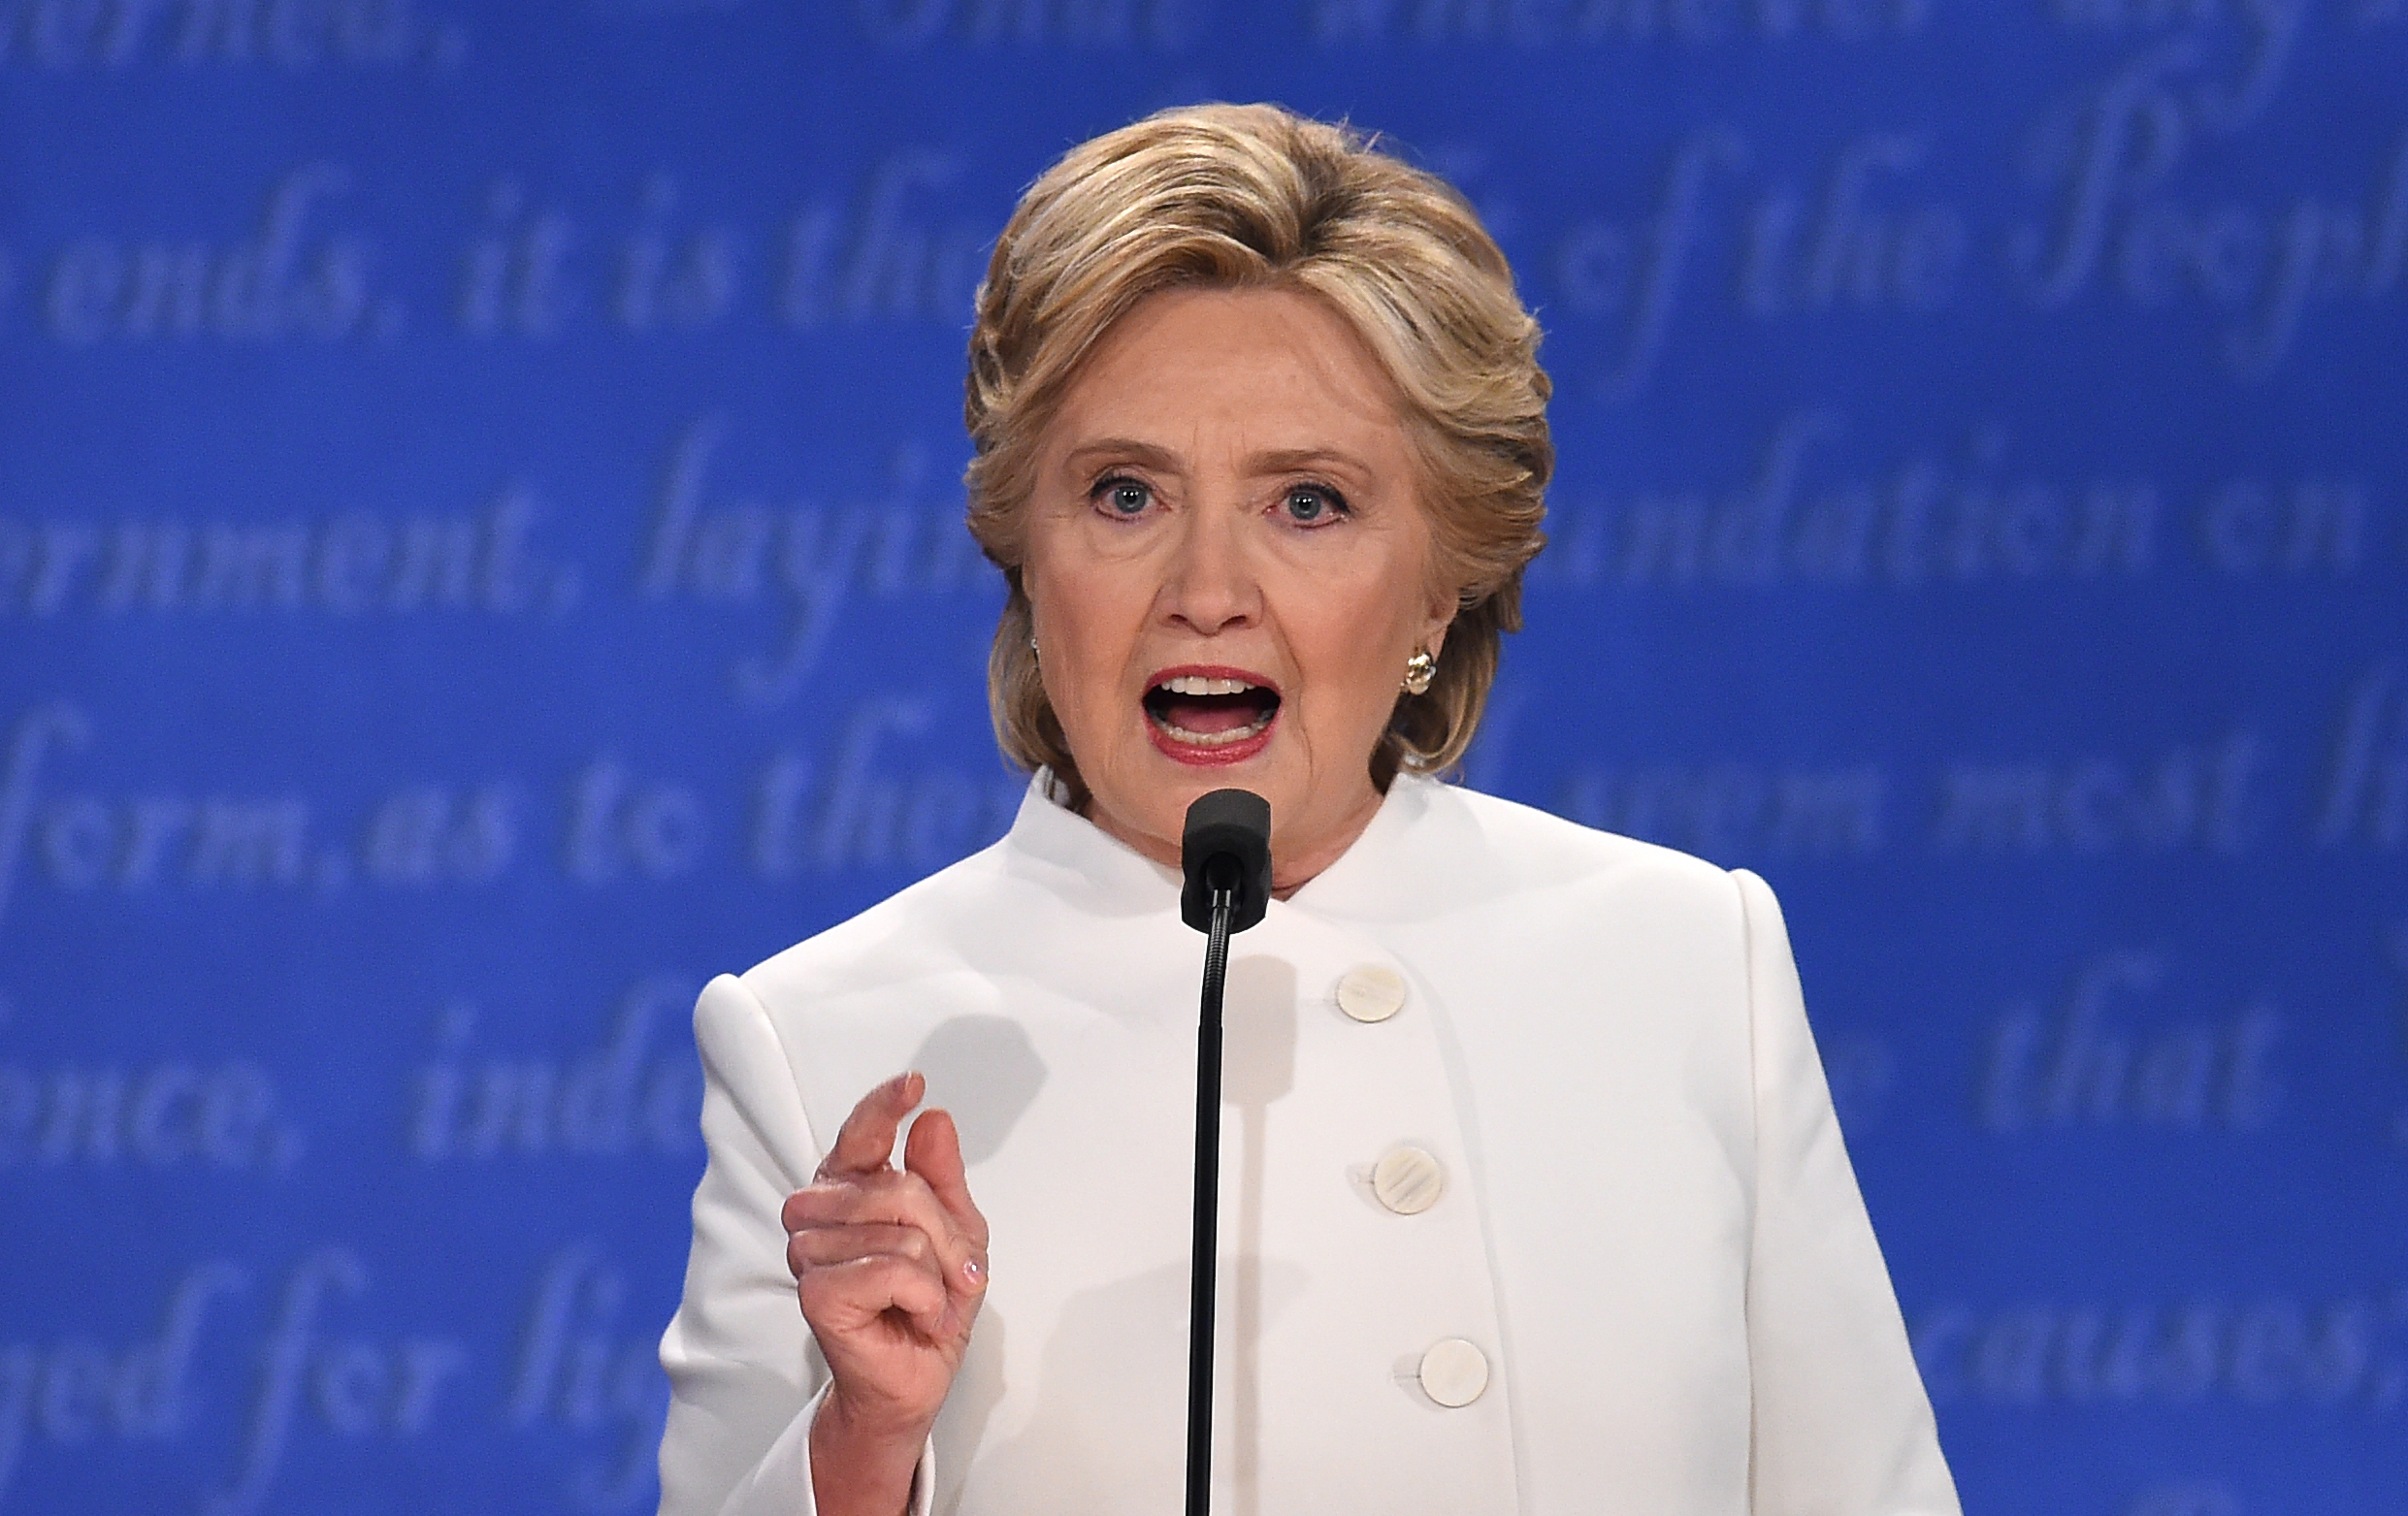 Hillary Clinton during the final presidential debate.